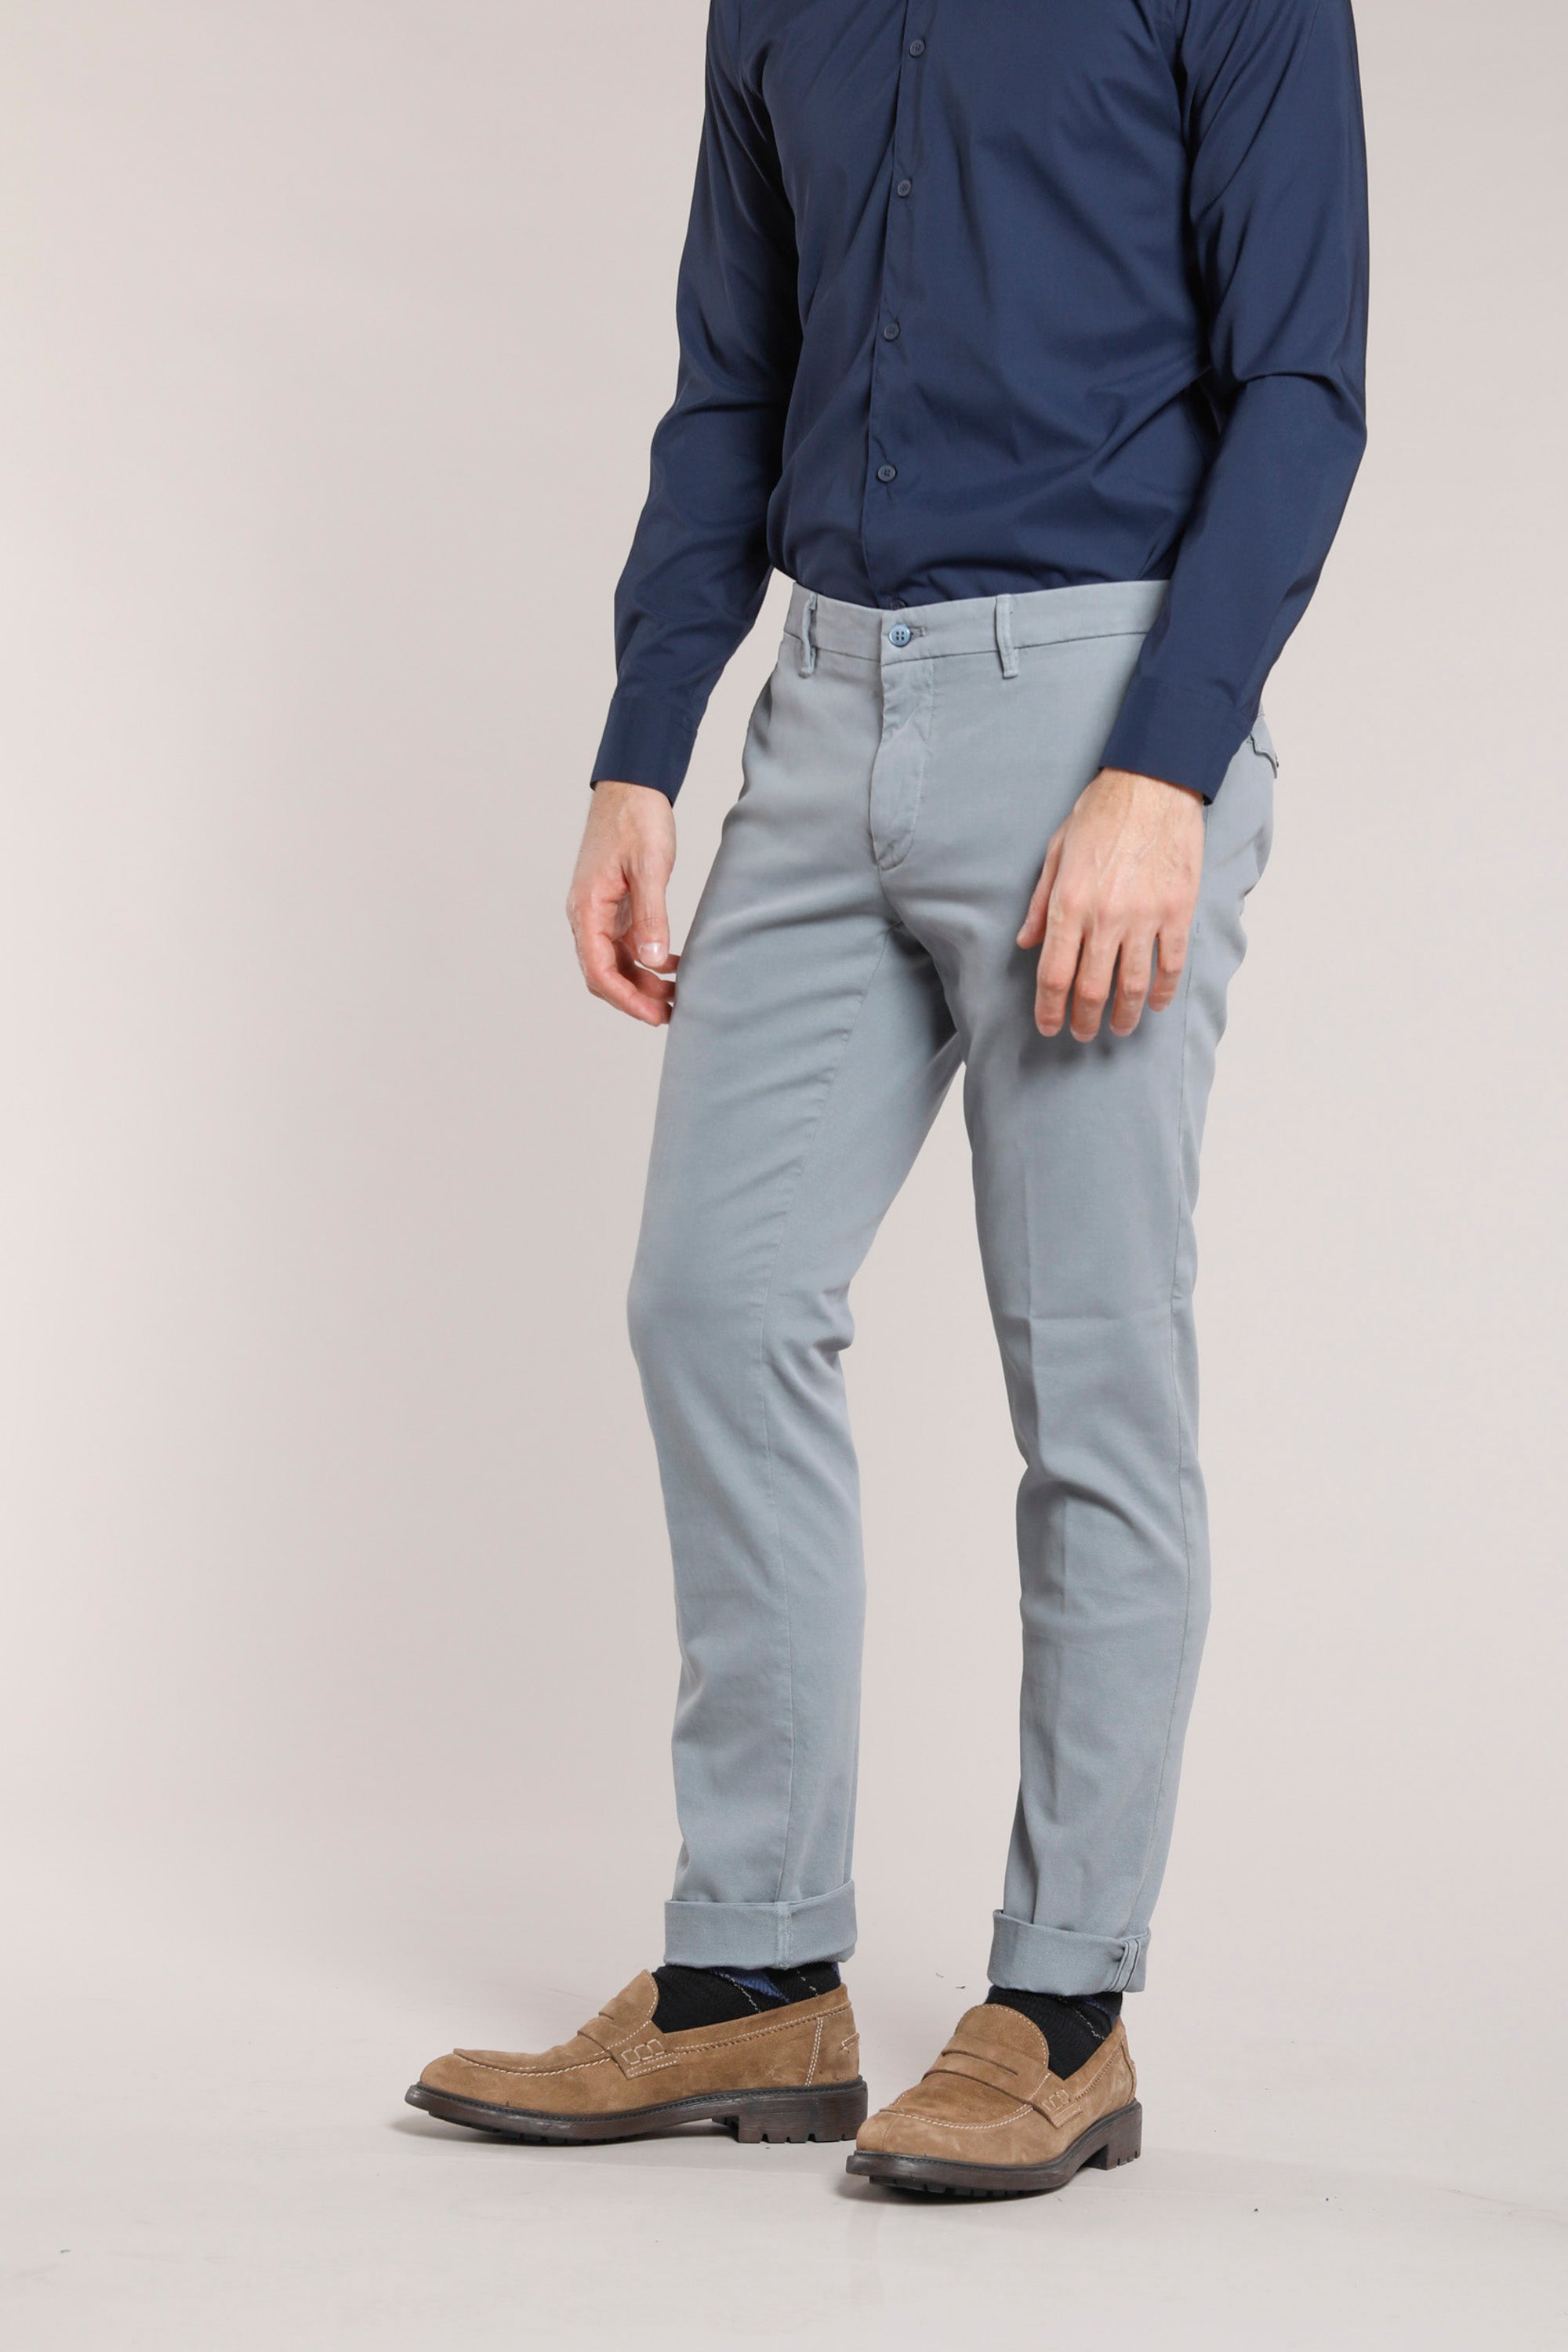 New York City pantalon chino homme en coton armuré coupe regular